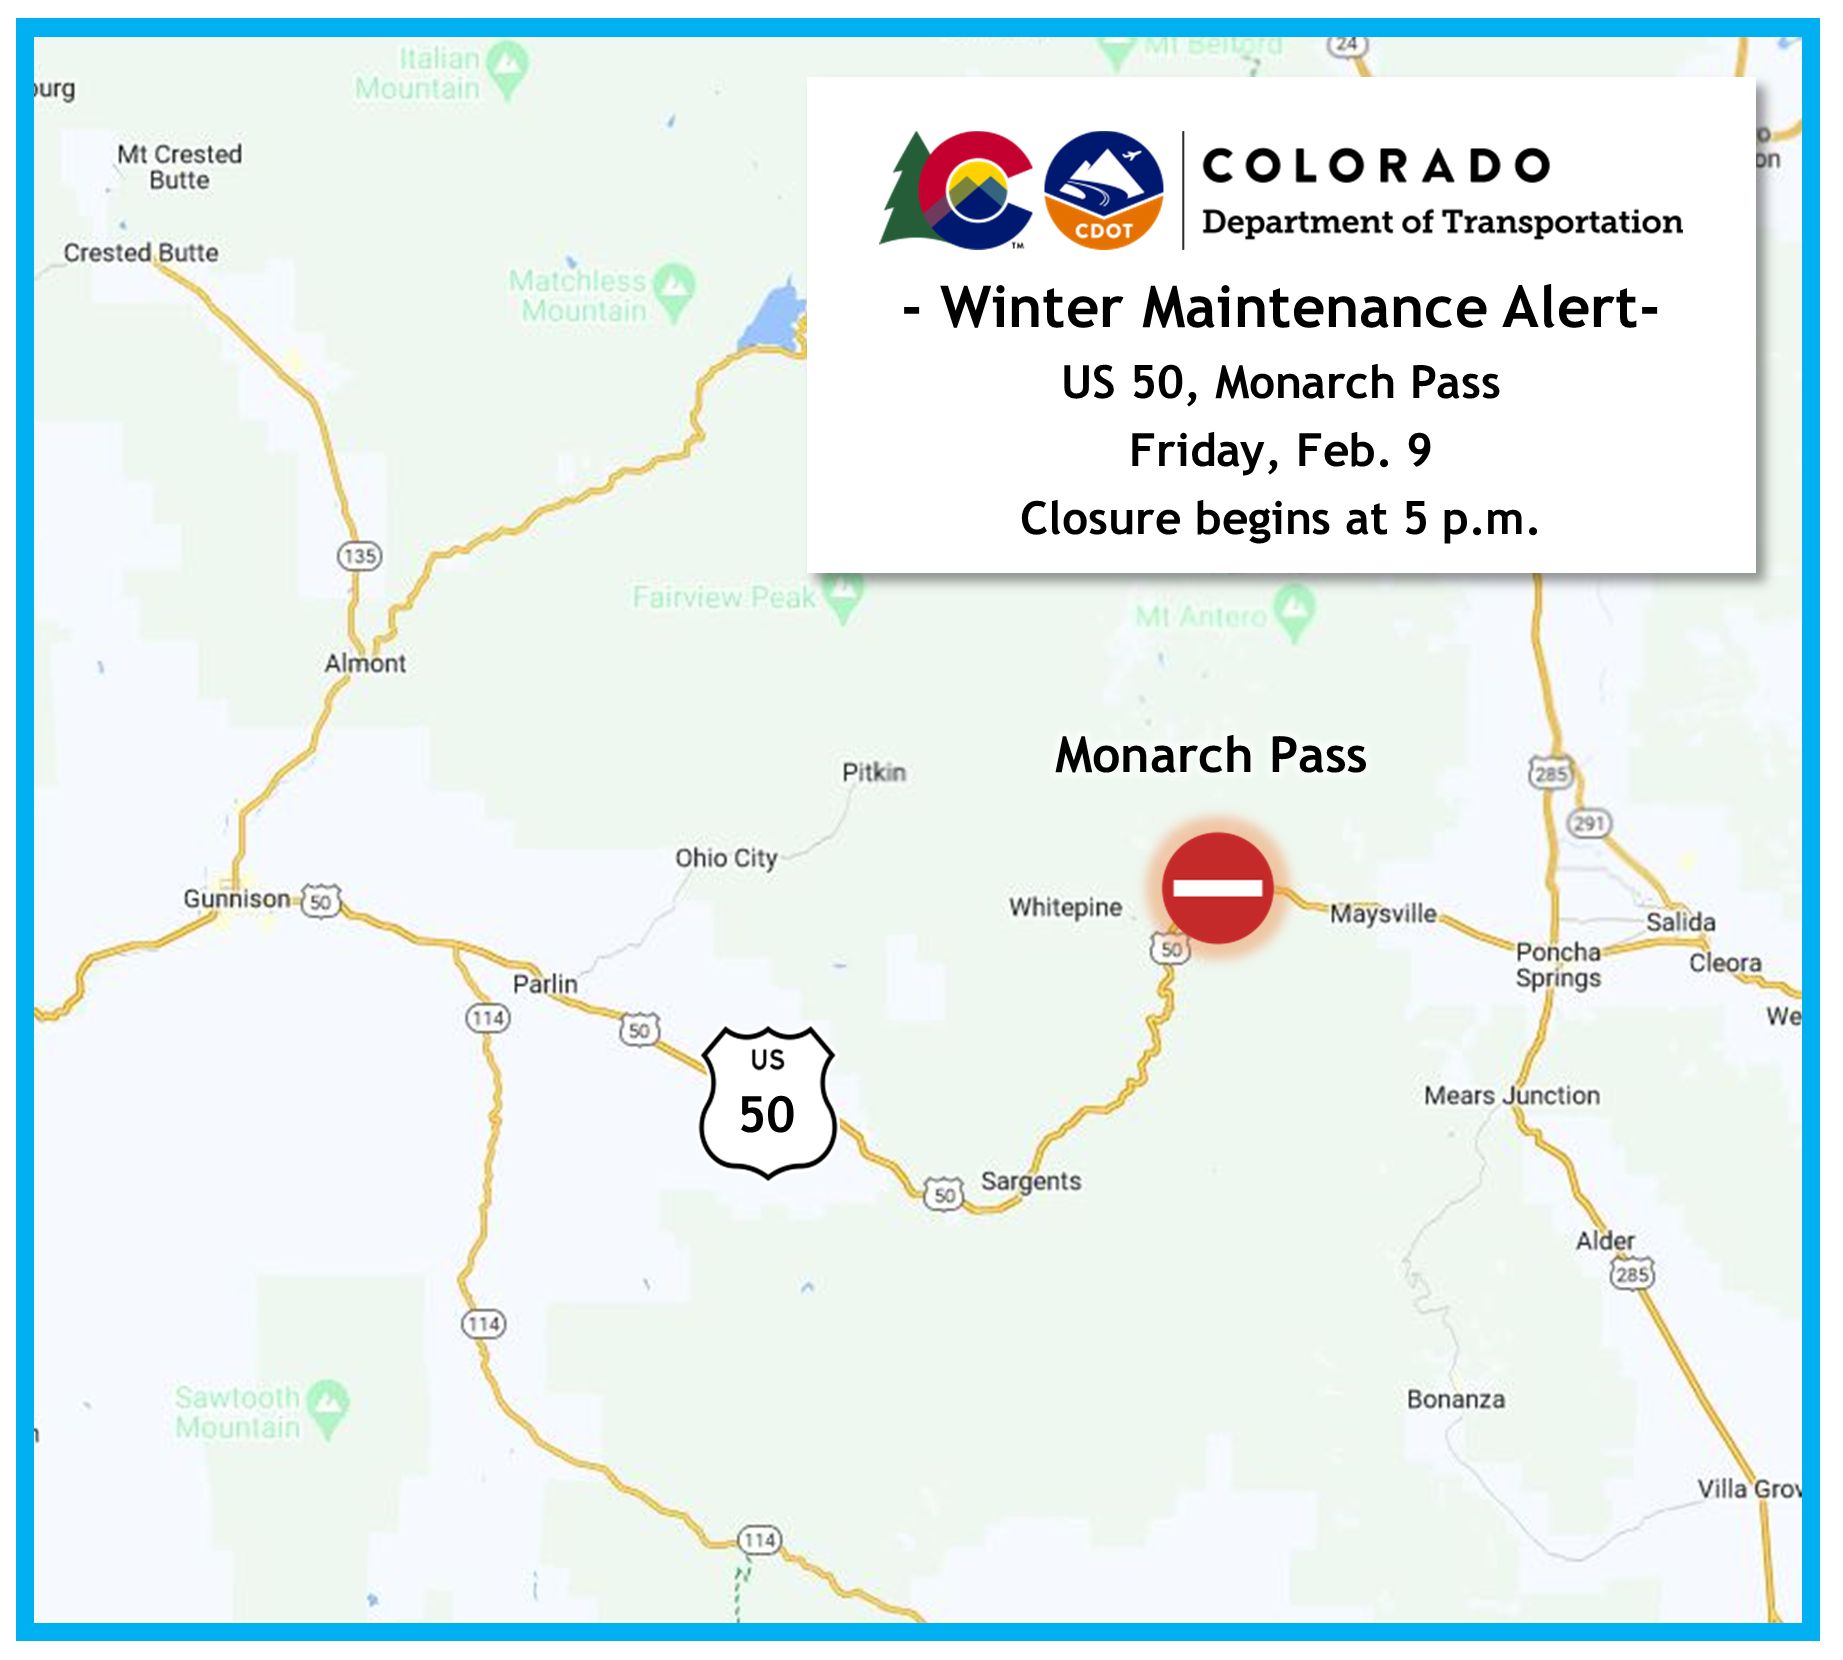 US 50 Monarch Pass winter maintenance alert map.png detail image